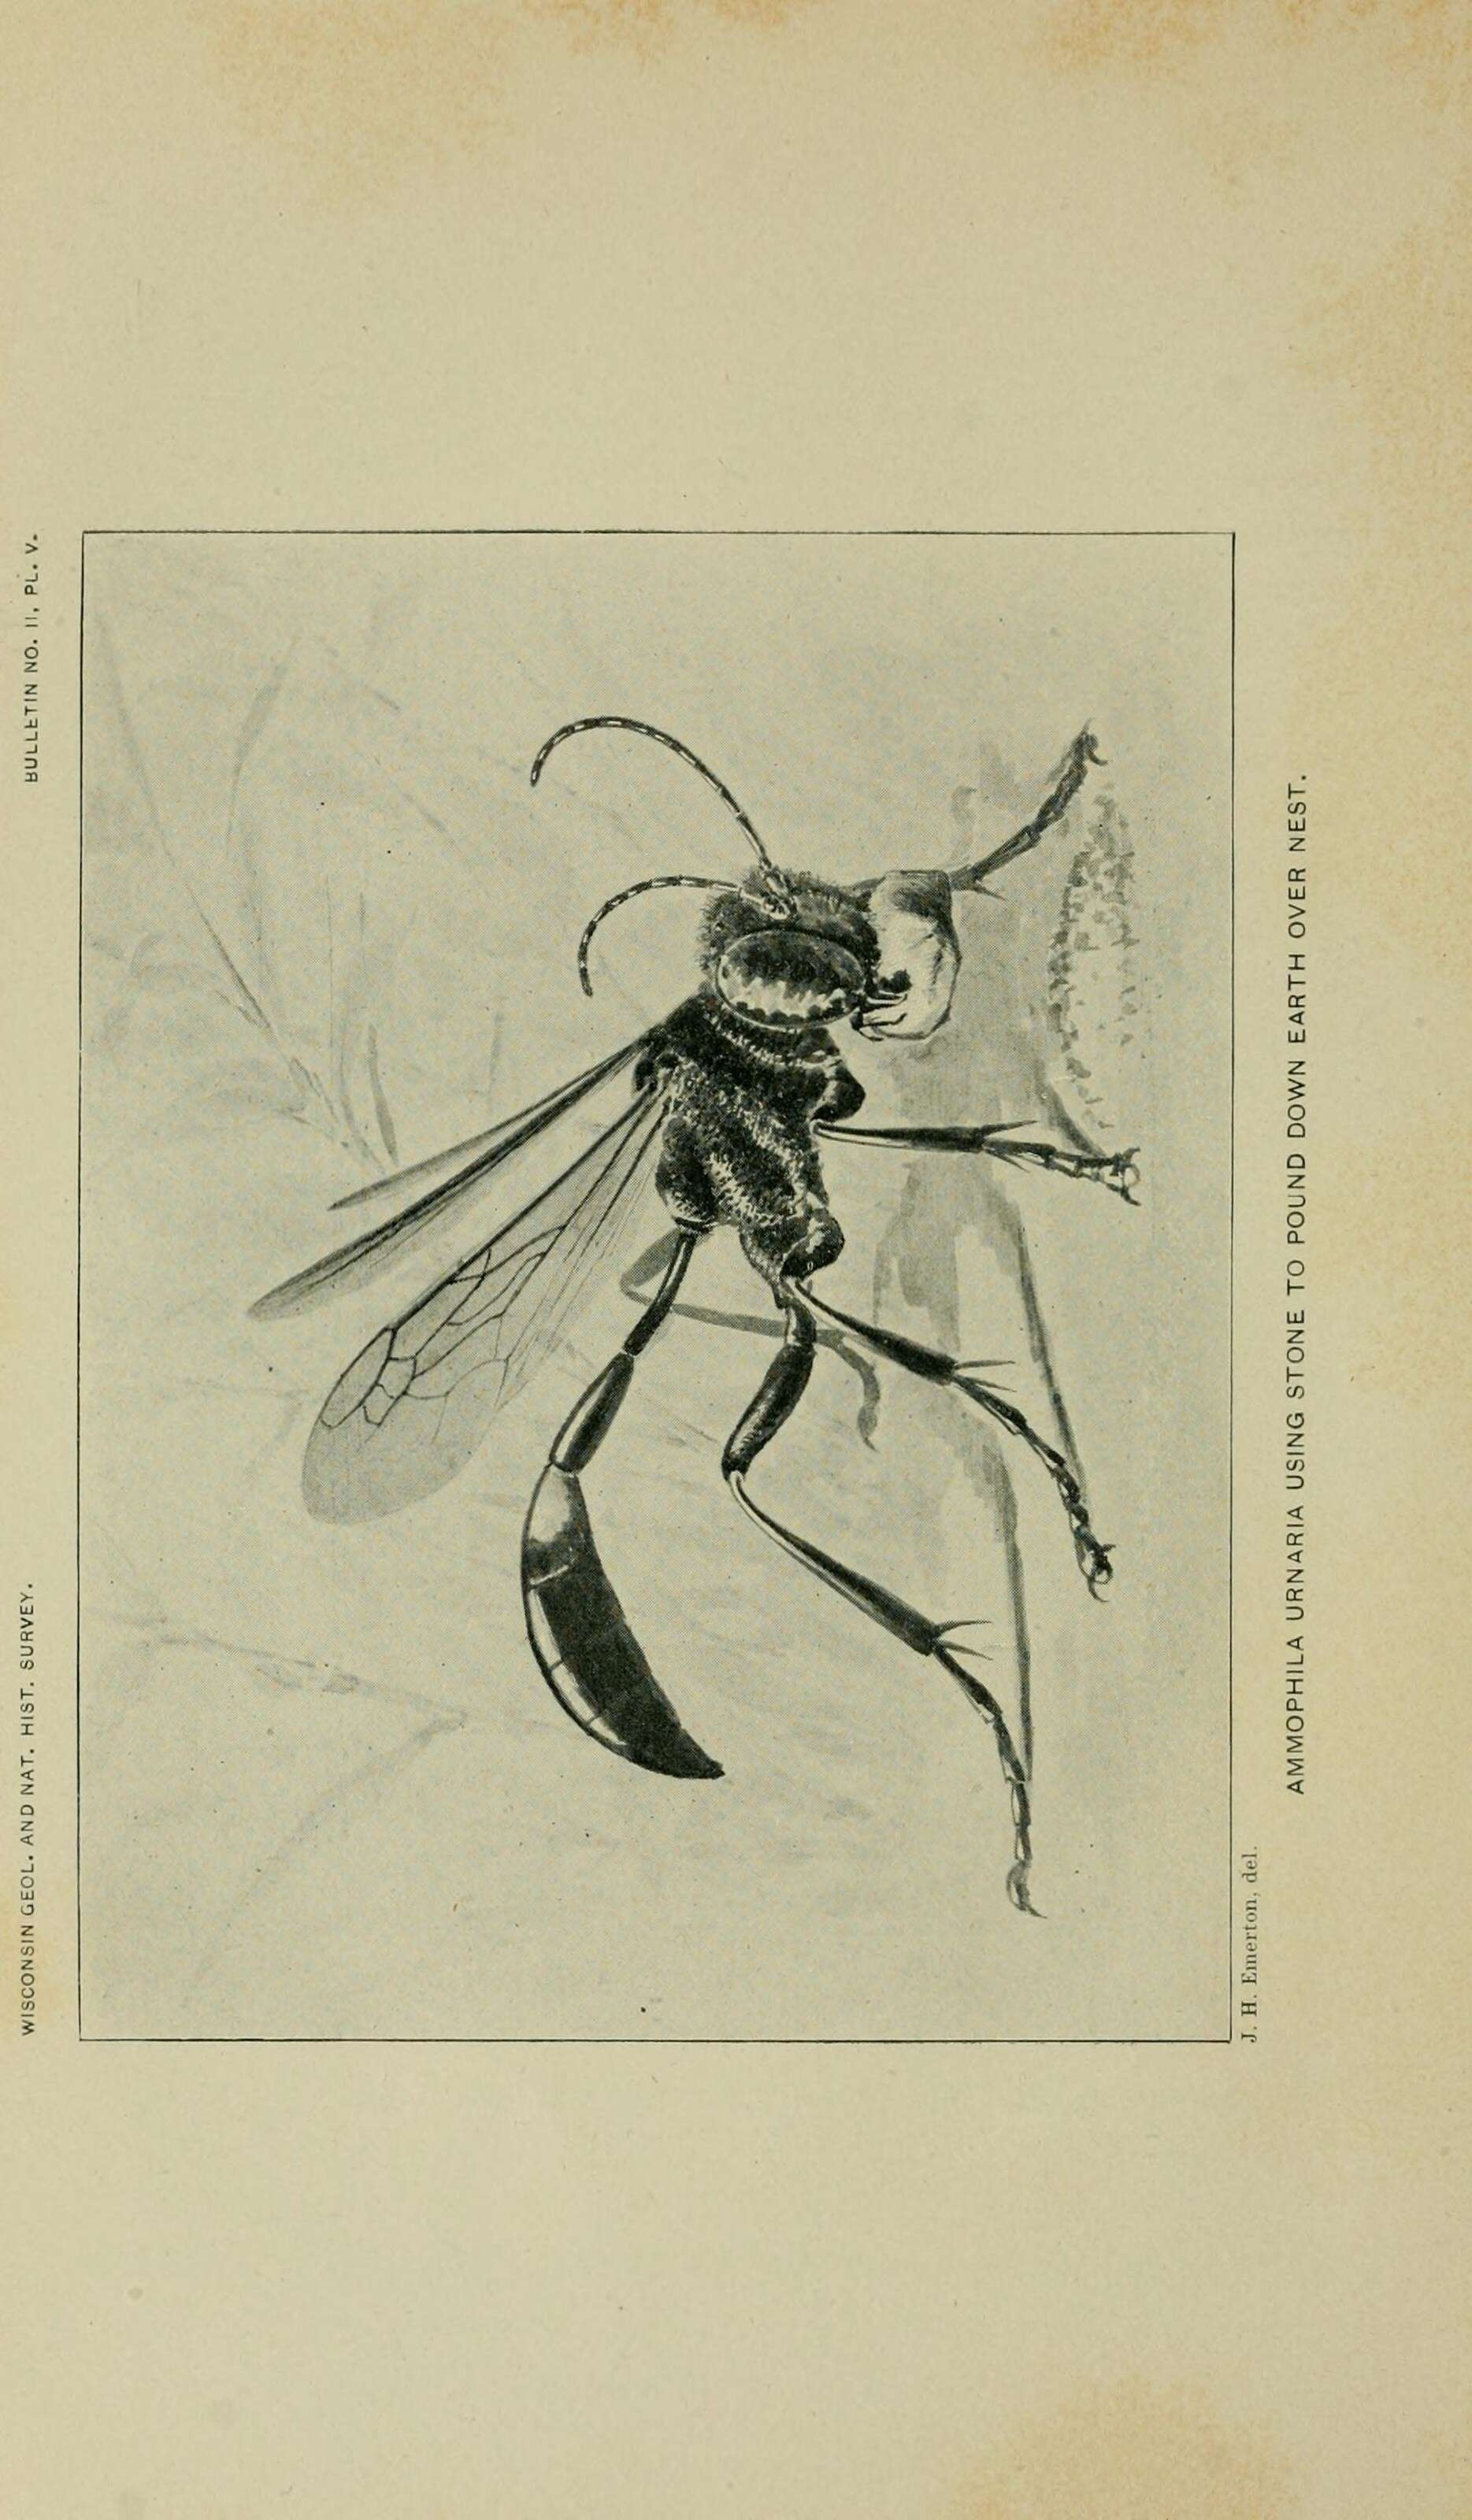 Sivun Ammophila urnaria Dahlbom 1843 kuva